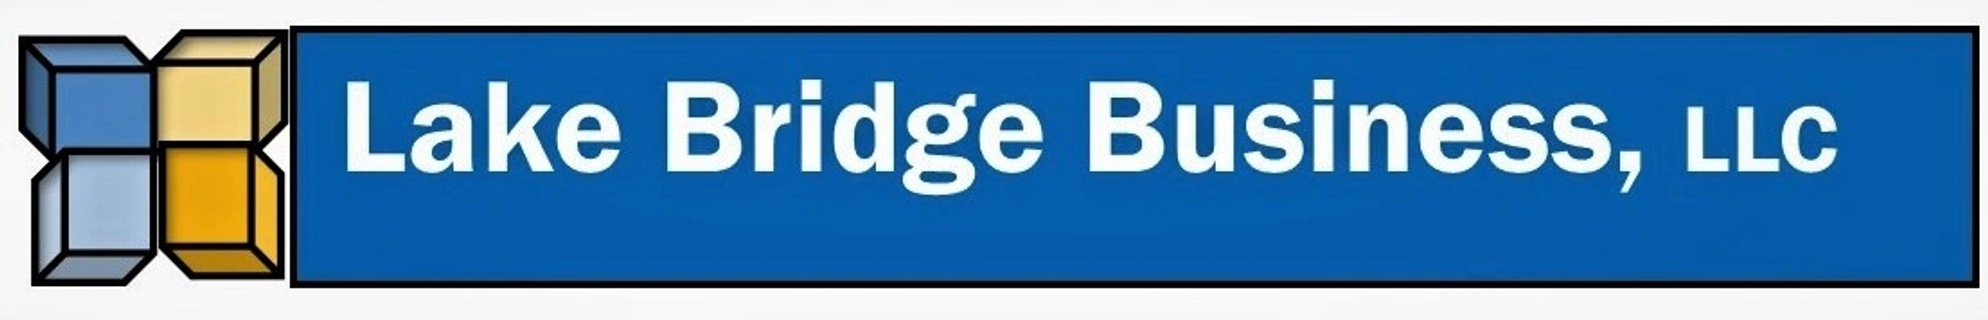 Lake Bridge Business, LLC 